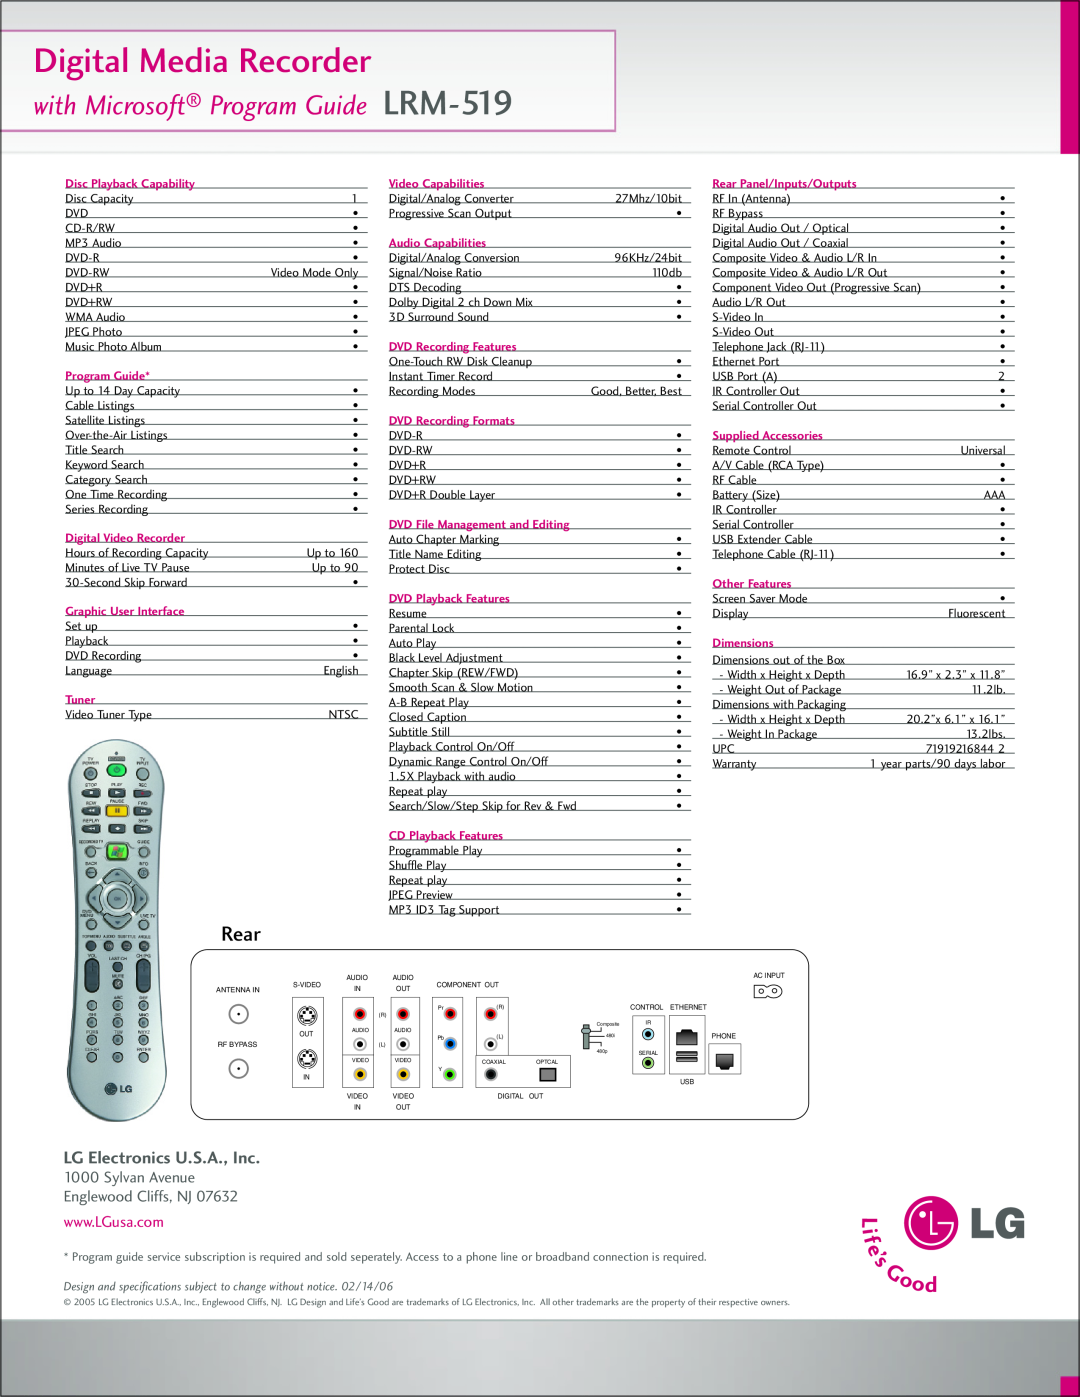 LG Electronics manual Digital Media Recorder, with Microsoft Program Guide LRM-519, Rear, LG Electronics U.S.A., Inc 